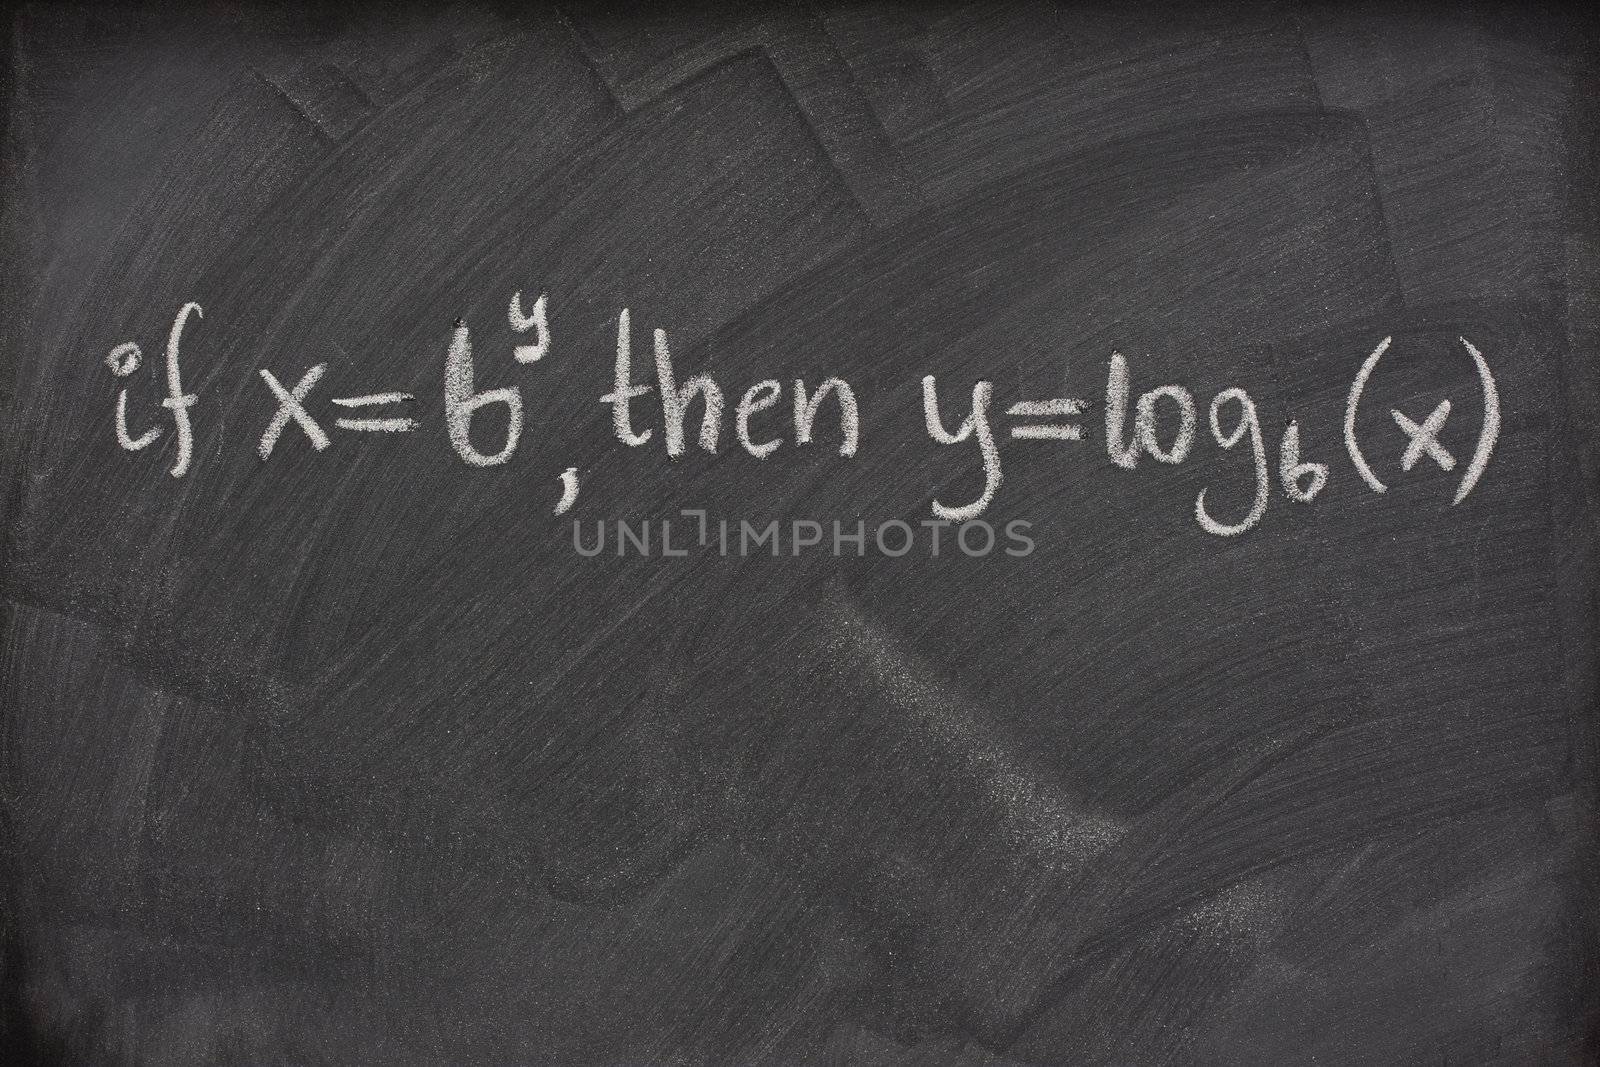 logarithm definition handwritten with white chalk on a school blackboard with eraser smudges